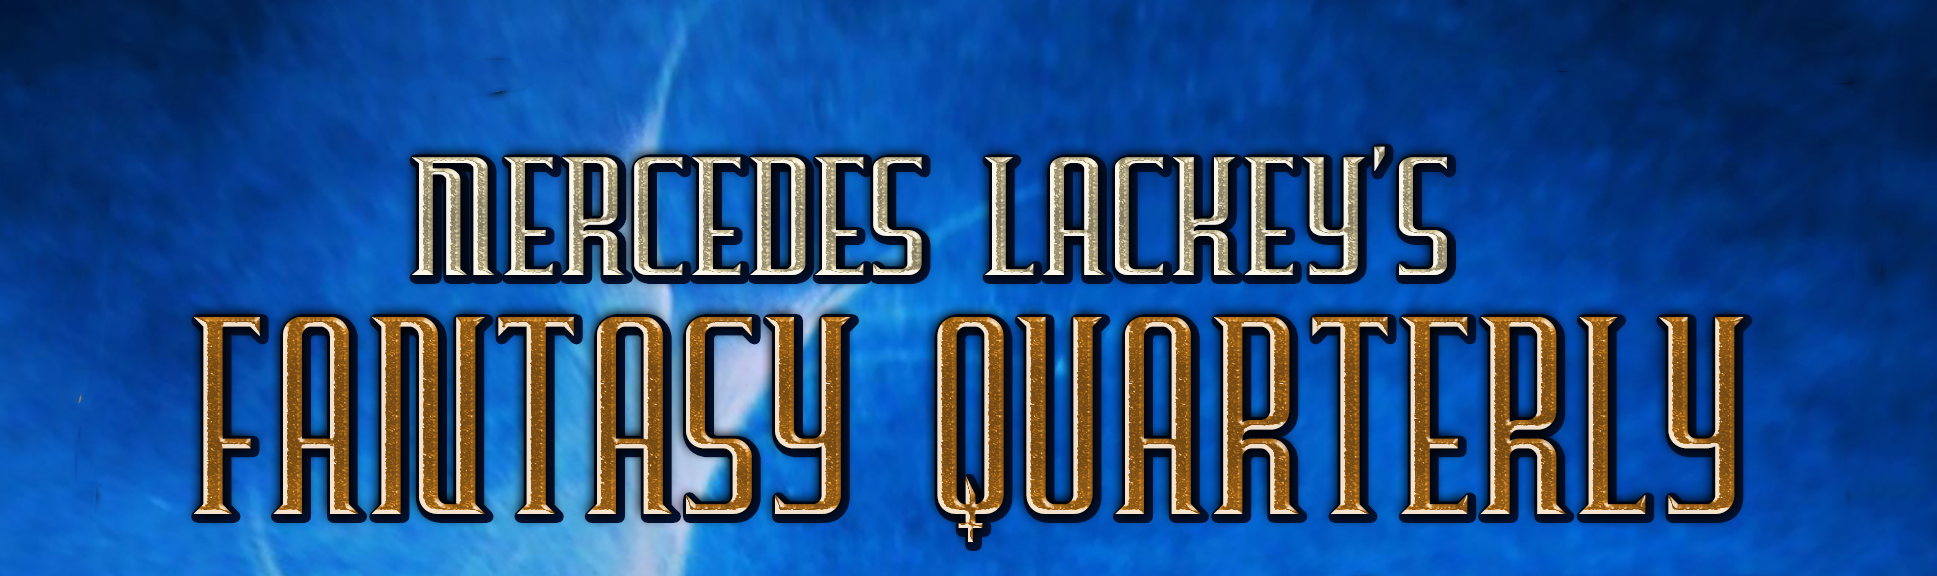 Coming Soon on Kickstarter: The Mercedes Lackey Fantasy Quarterly